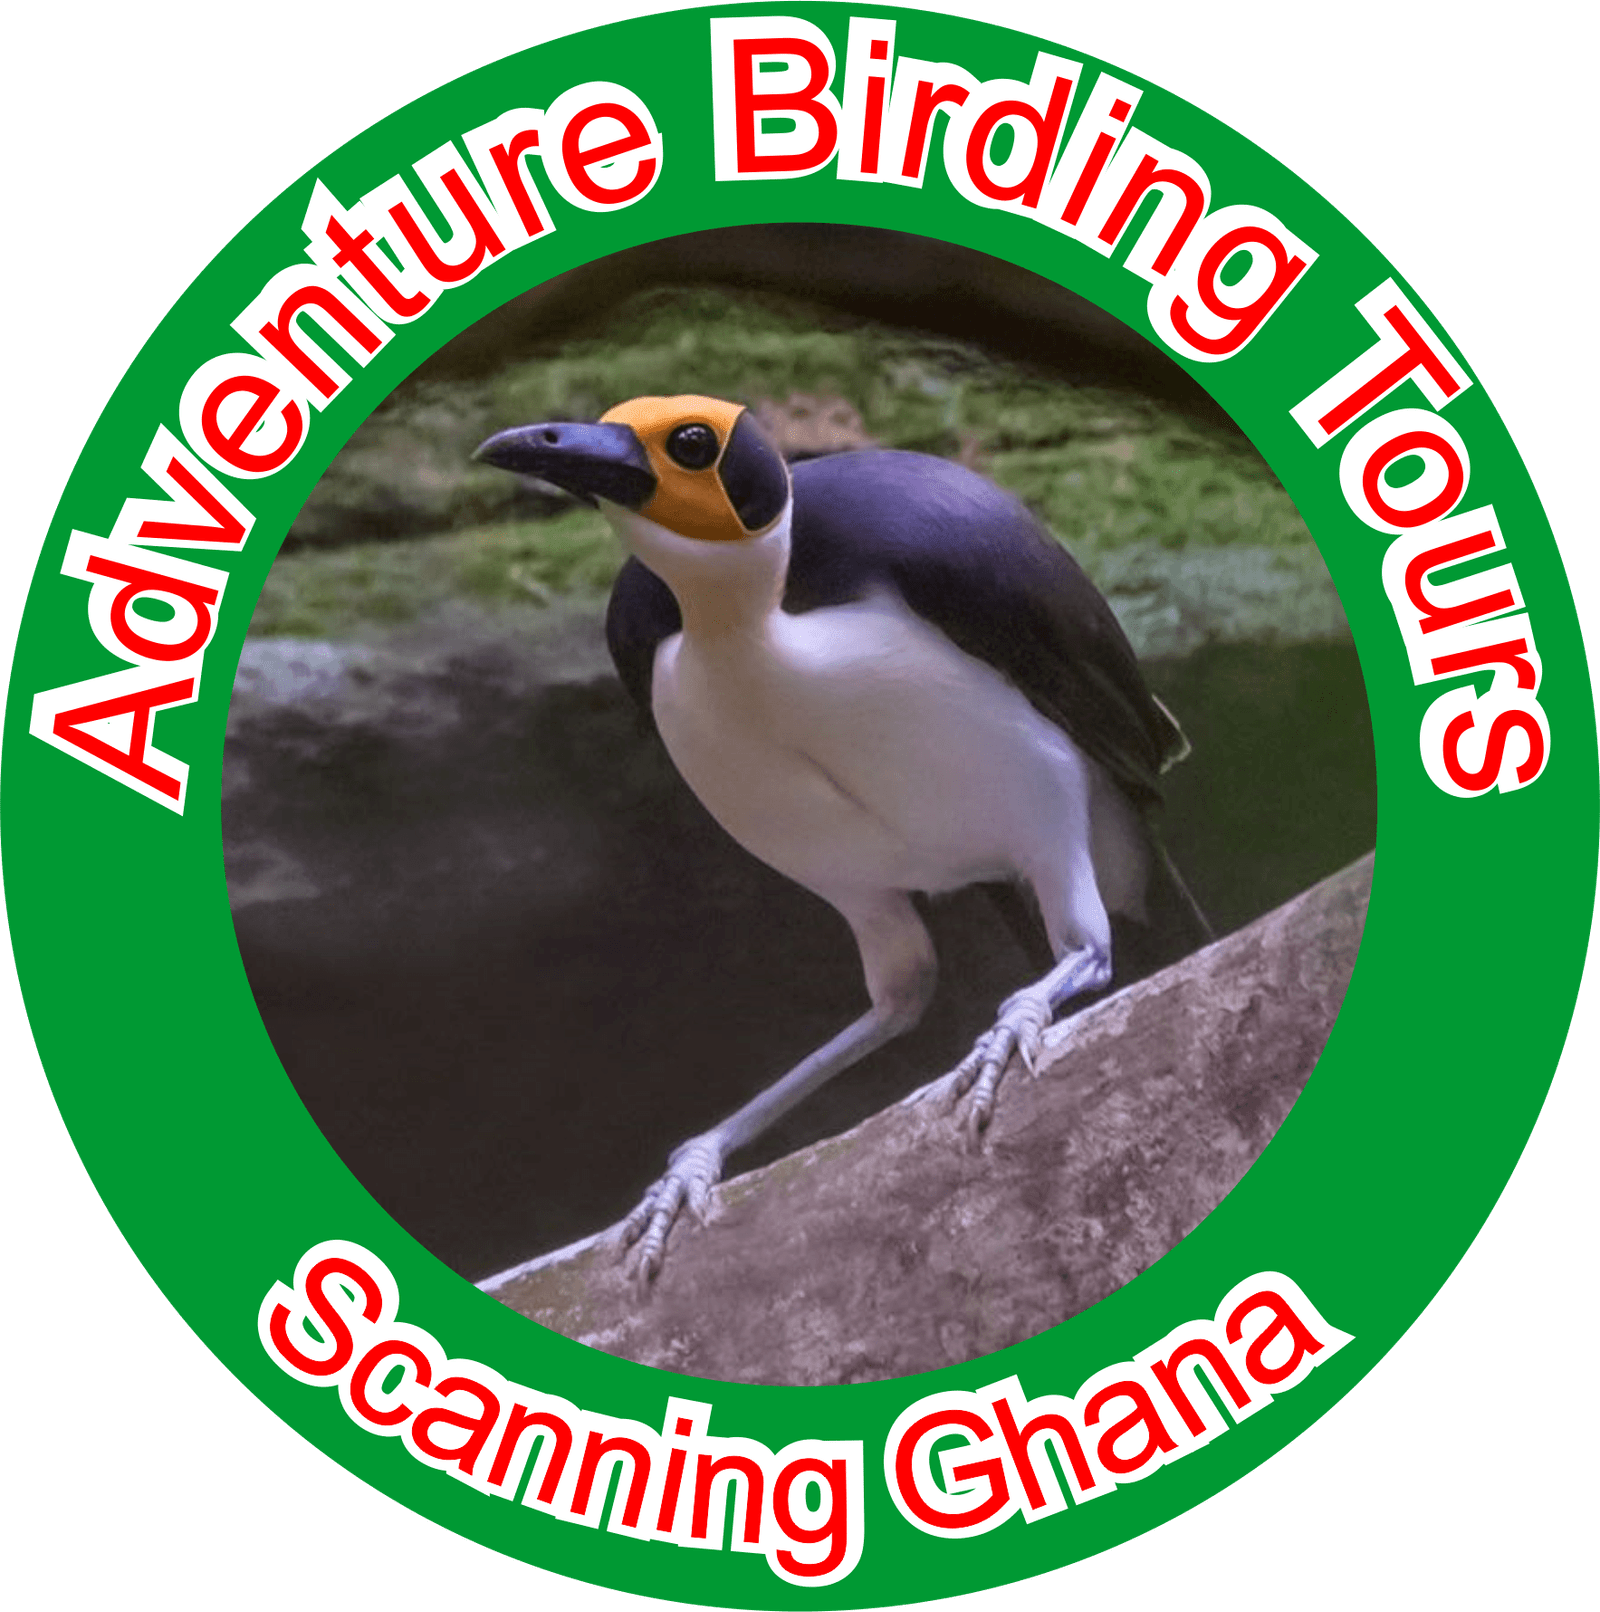 Adventure Birding Tours